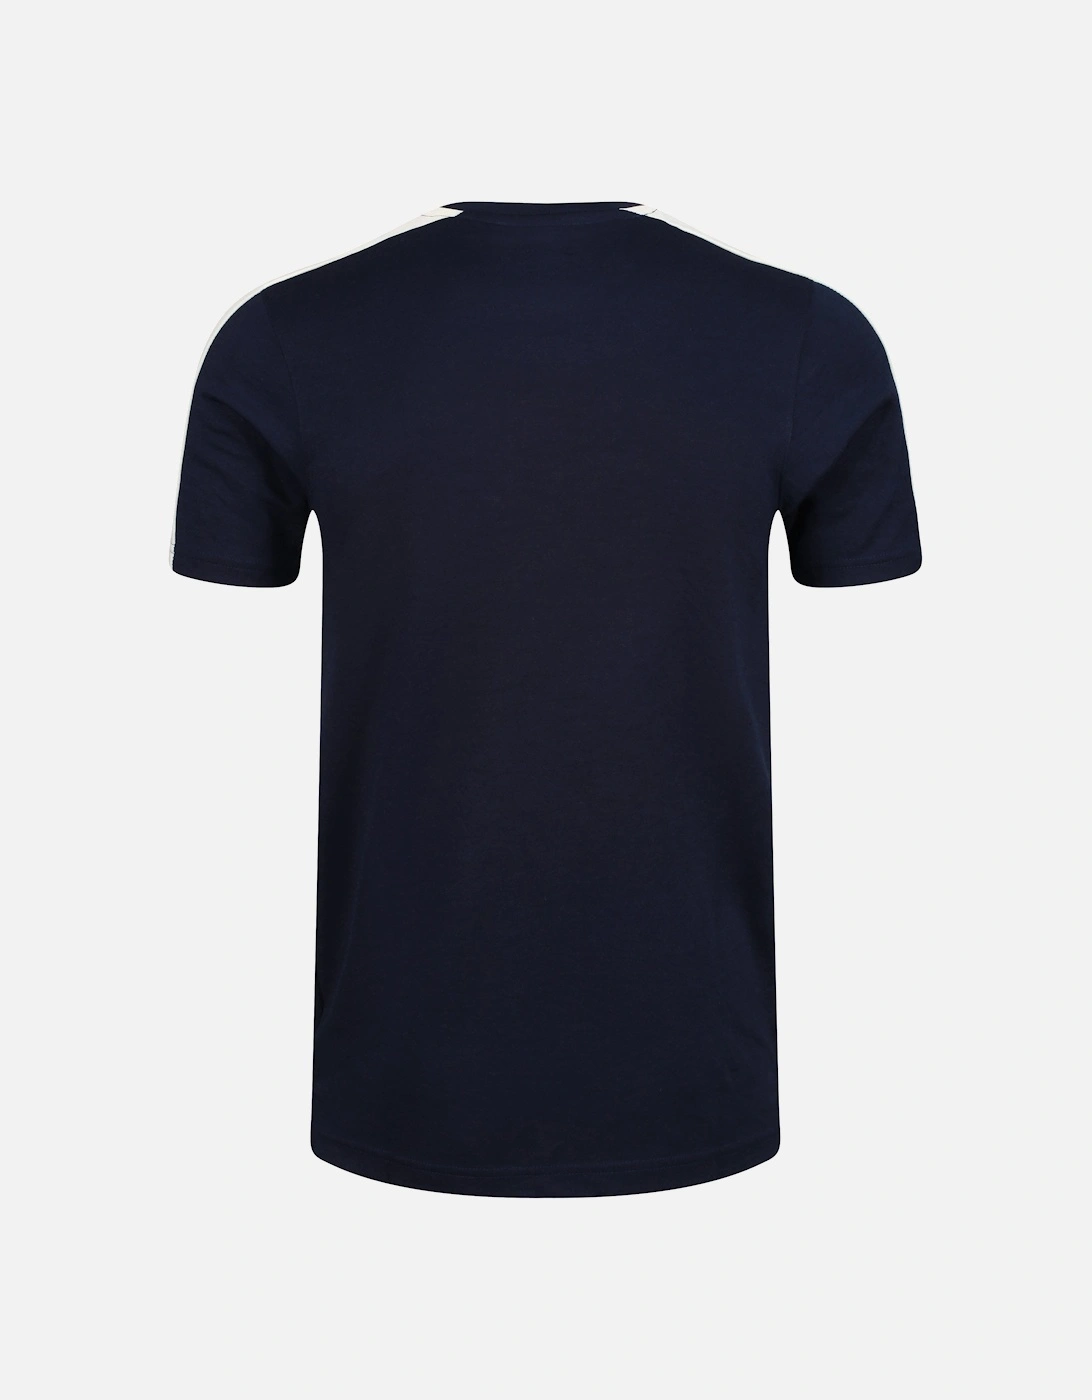 Ron T-Shirt | Navy